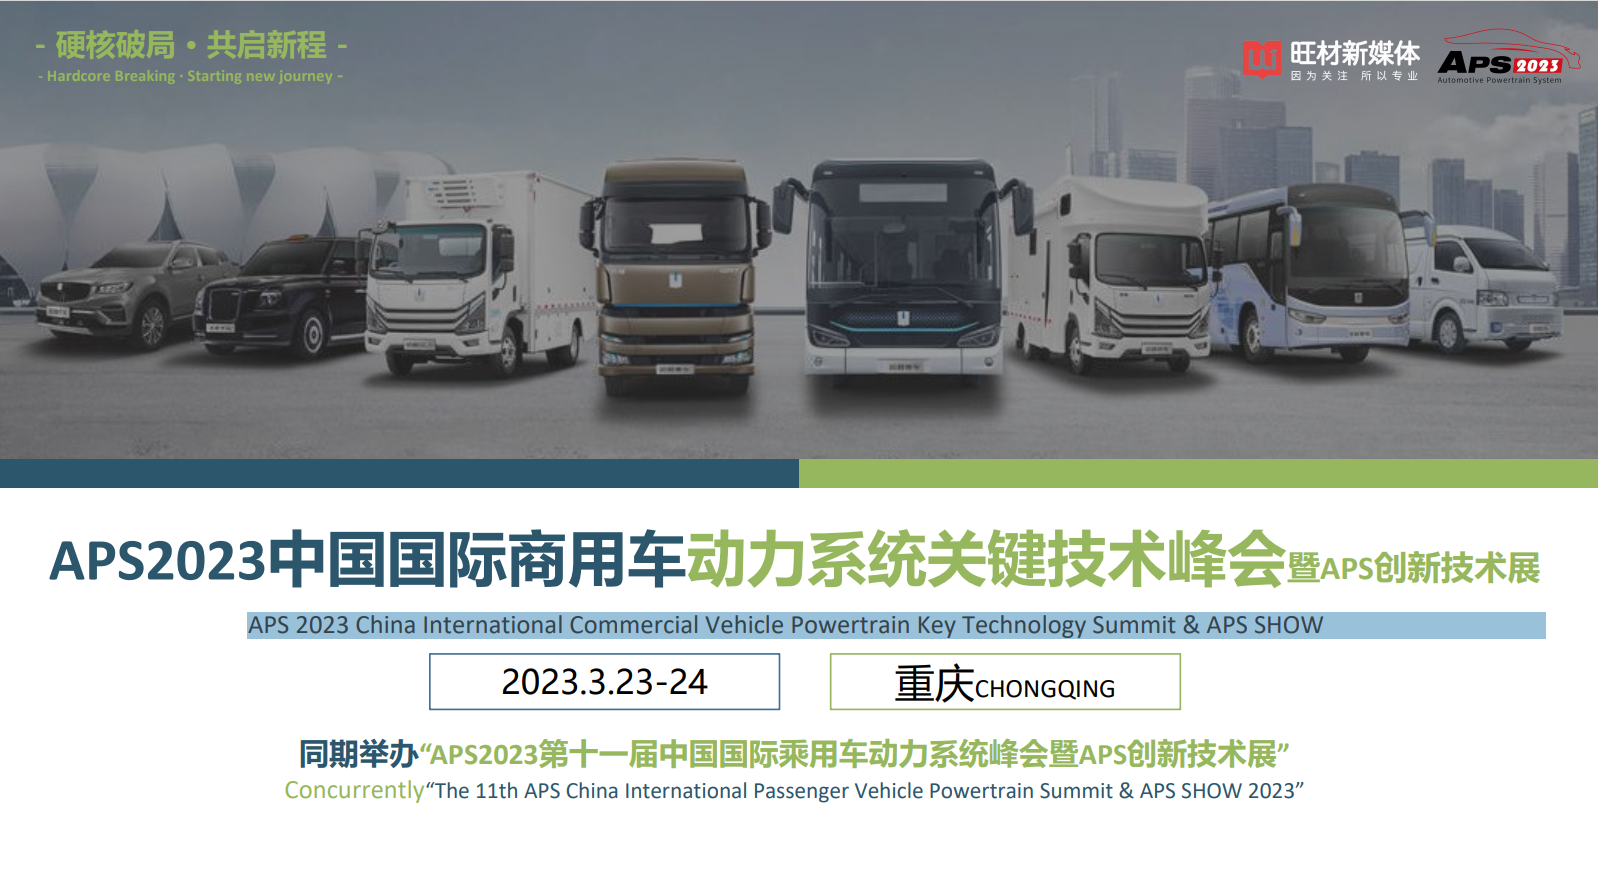 APS 2023 China International Commercial Vehicle Powertrain Key Technology Summit & APS SHOW